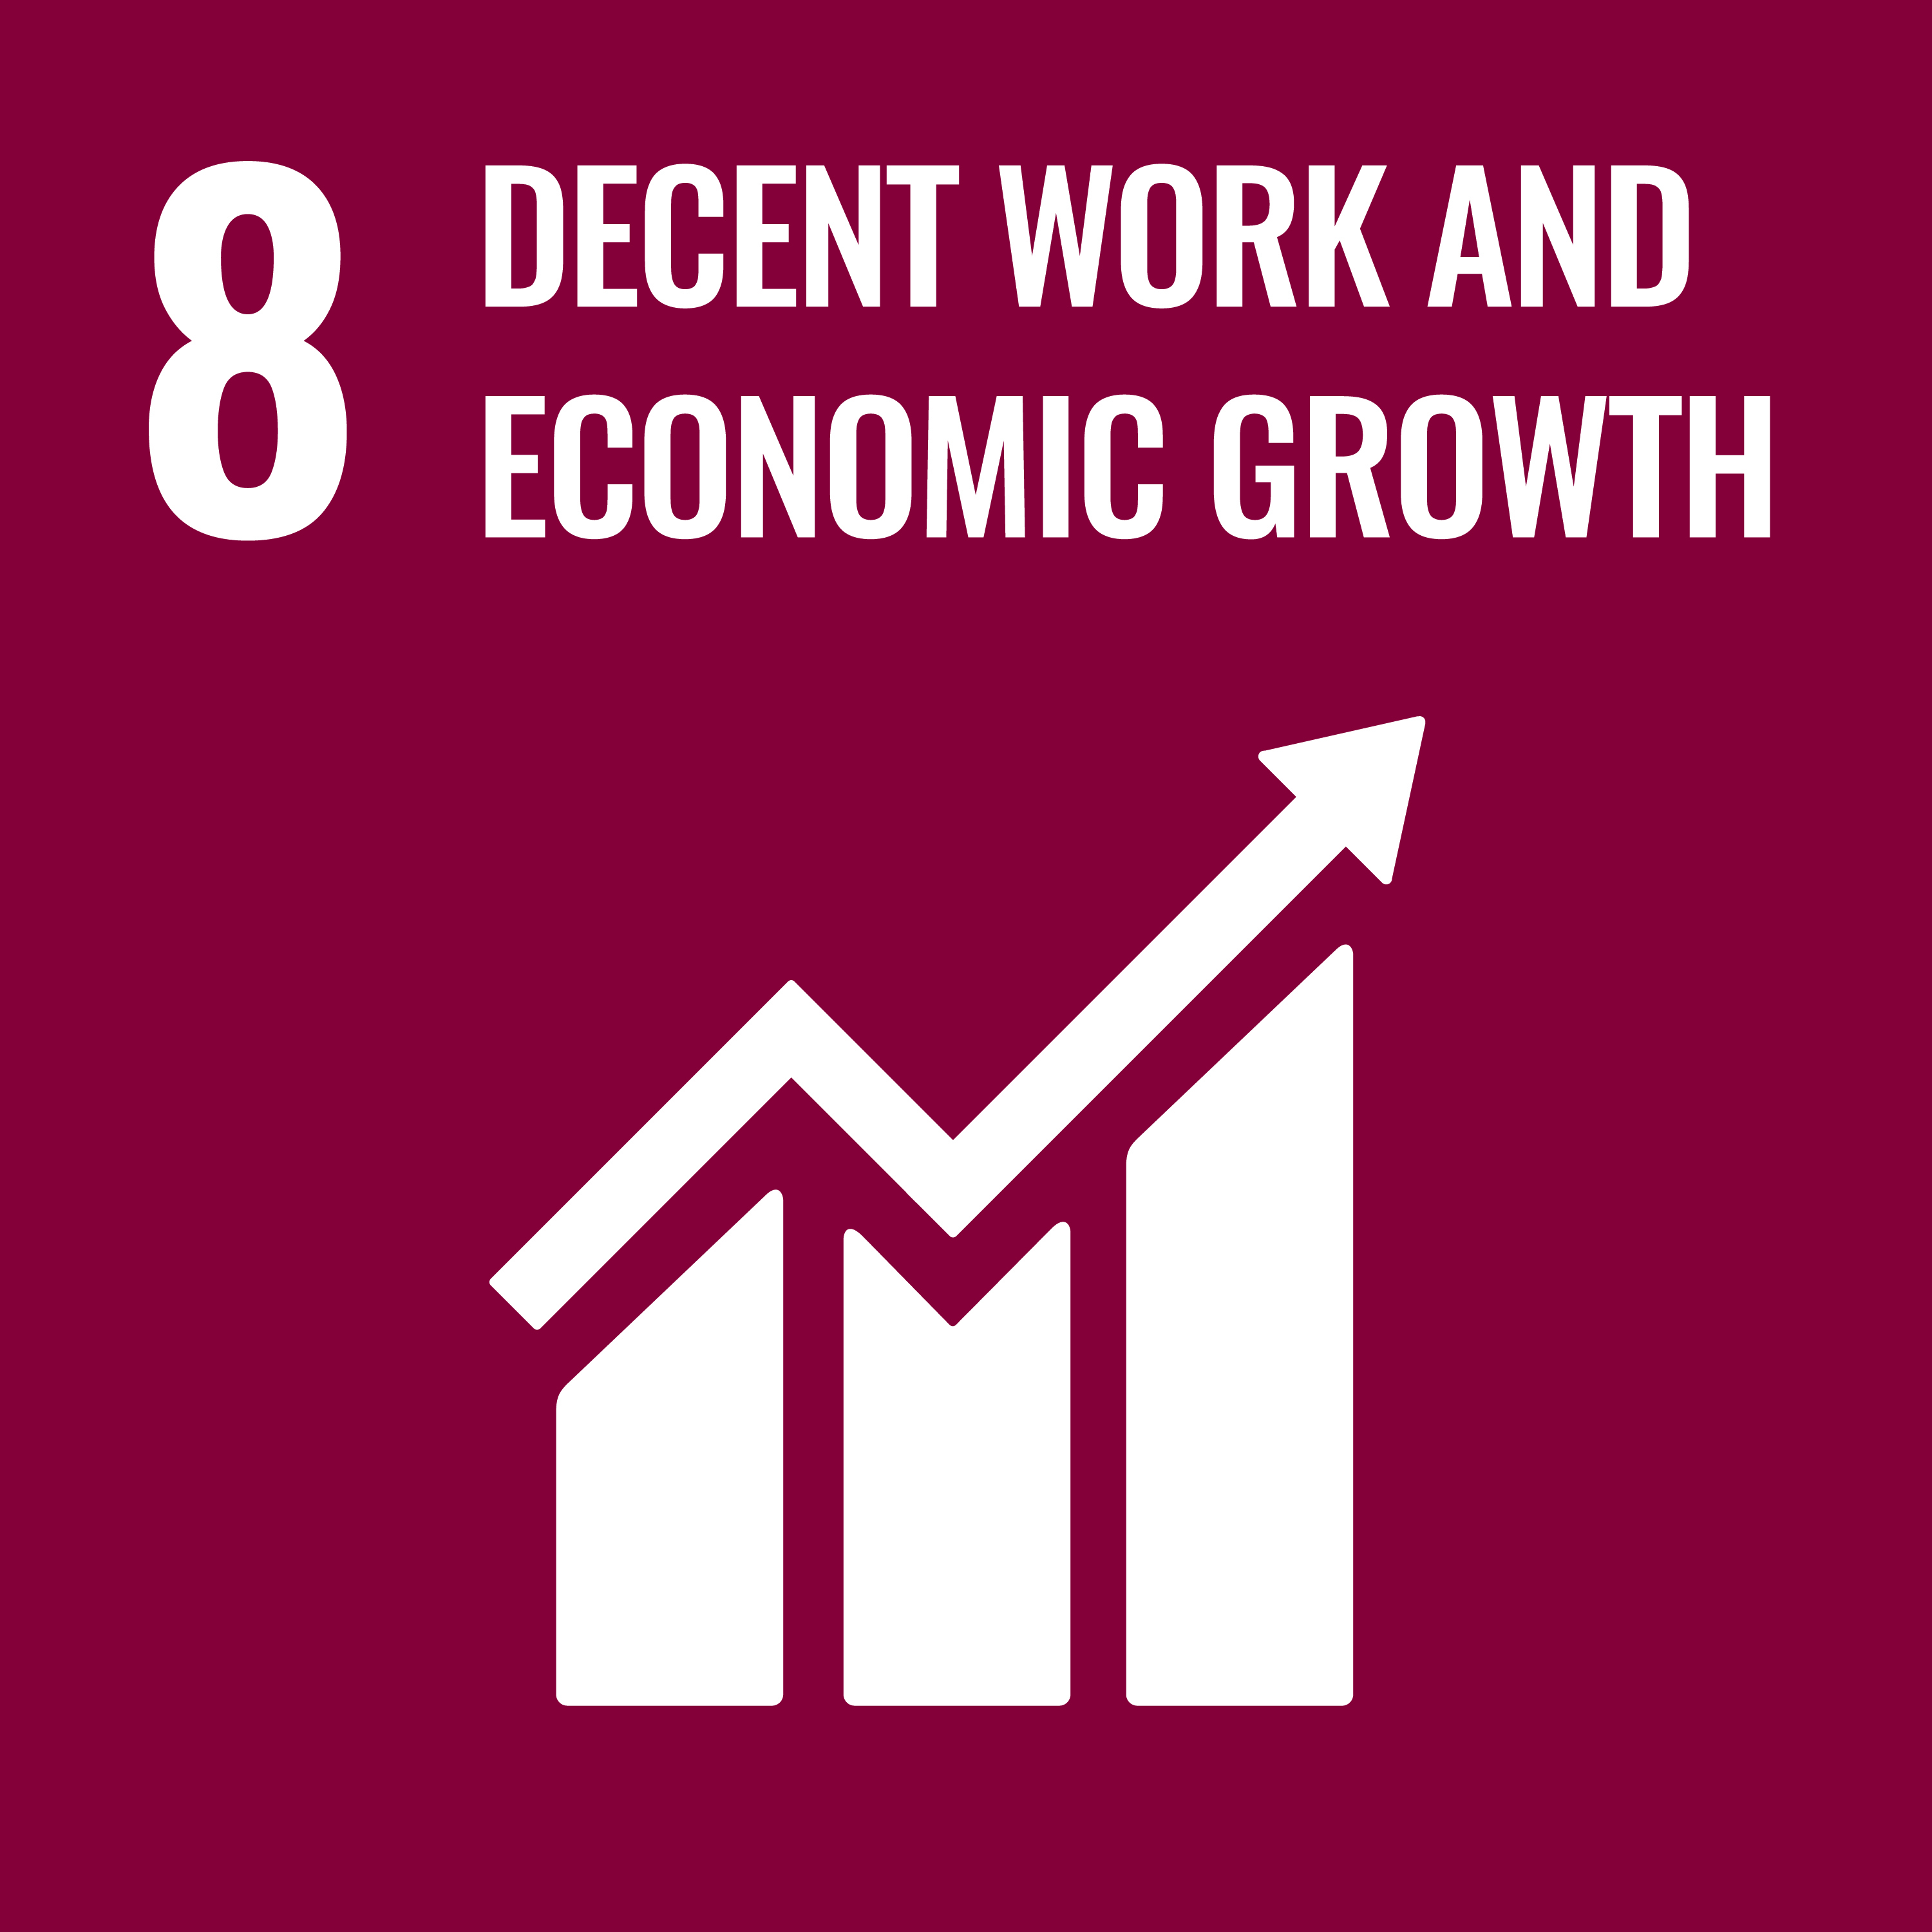 SDG 8: Decent and Economic Growth